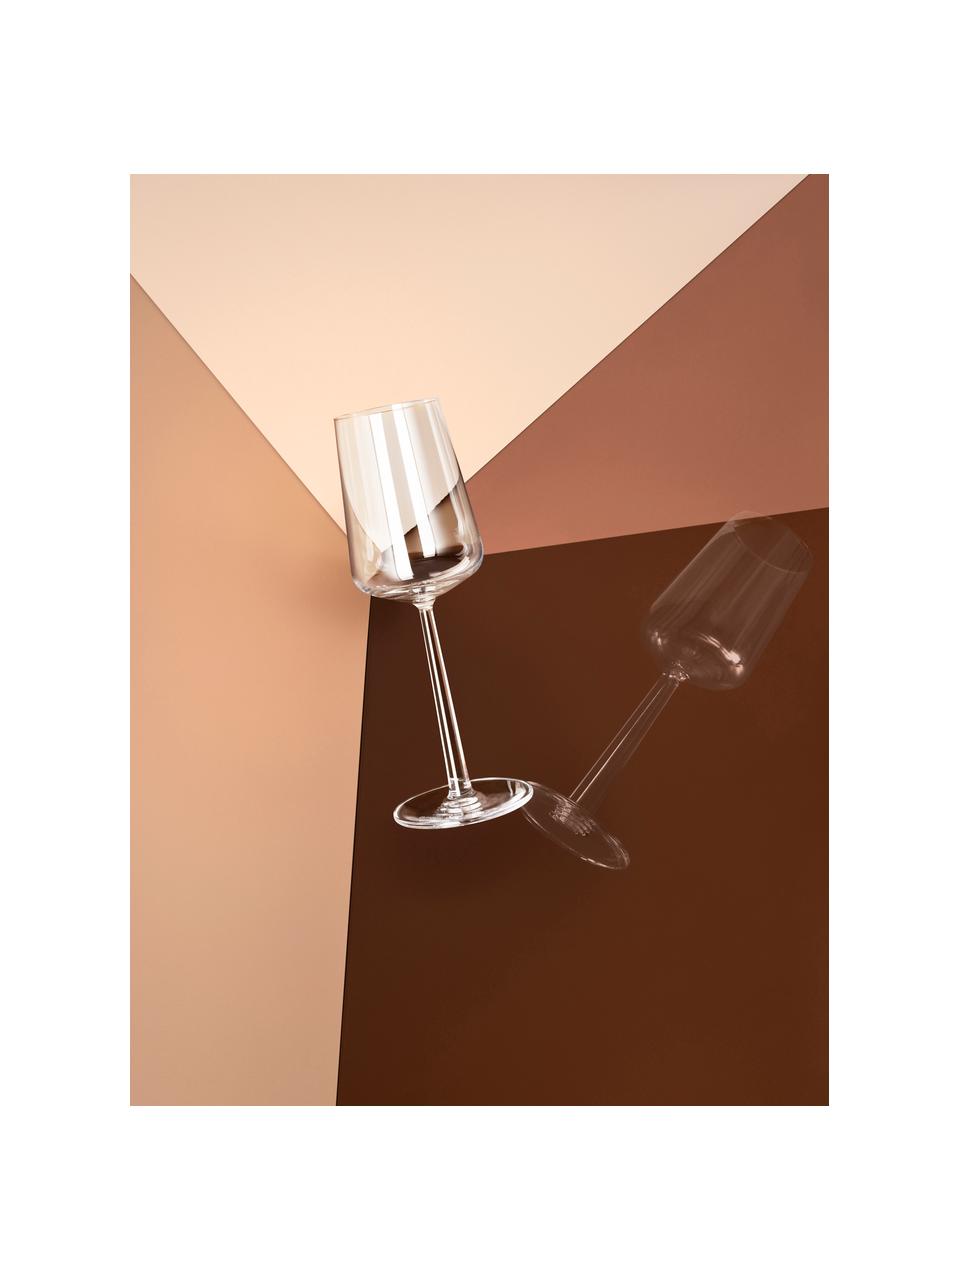 Witte wijnglazen Essence, 2 stuks, Glas, Transparant, Ø 6 x H 23 cm, 330 ml